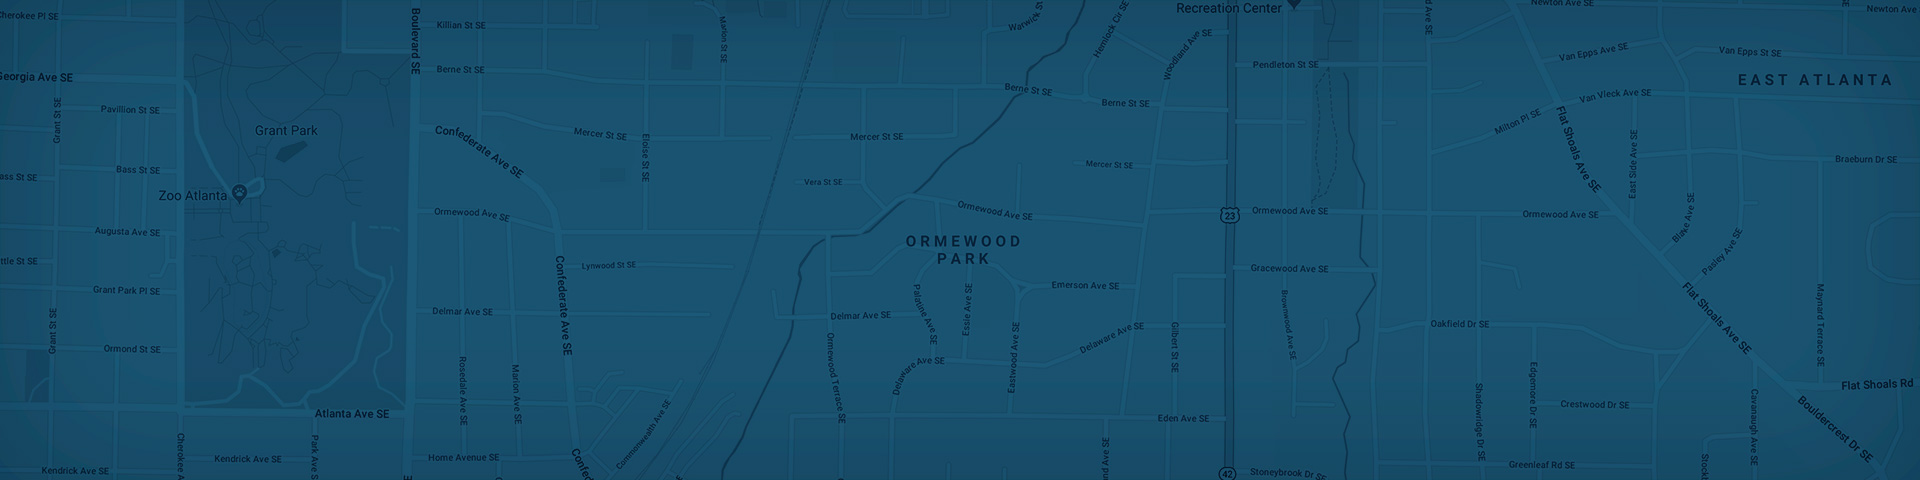 Ormewood Park Map